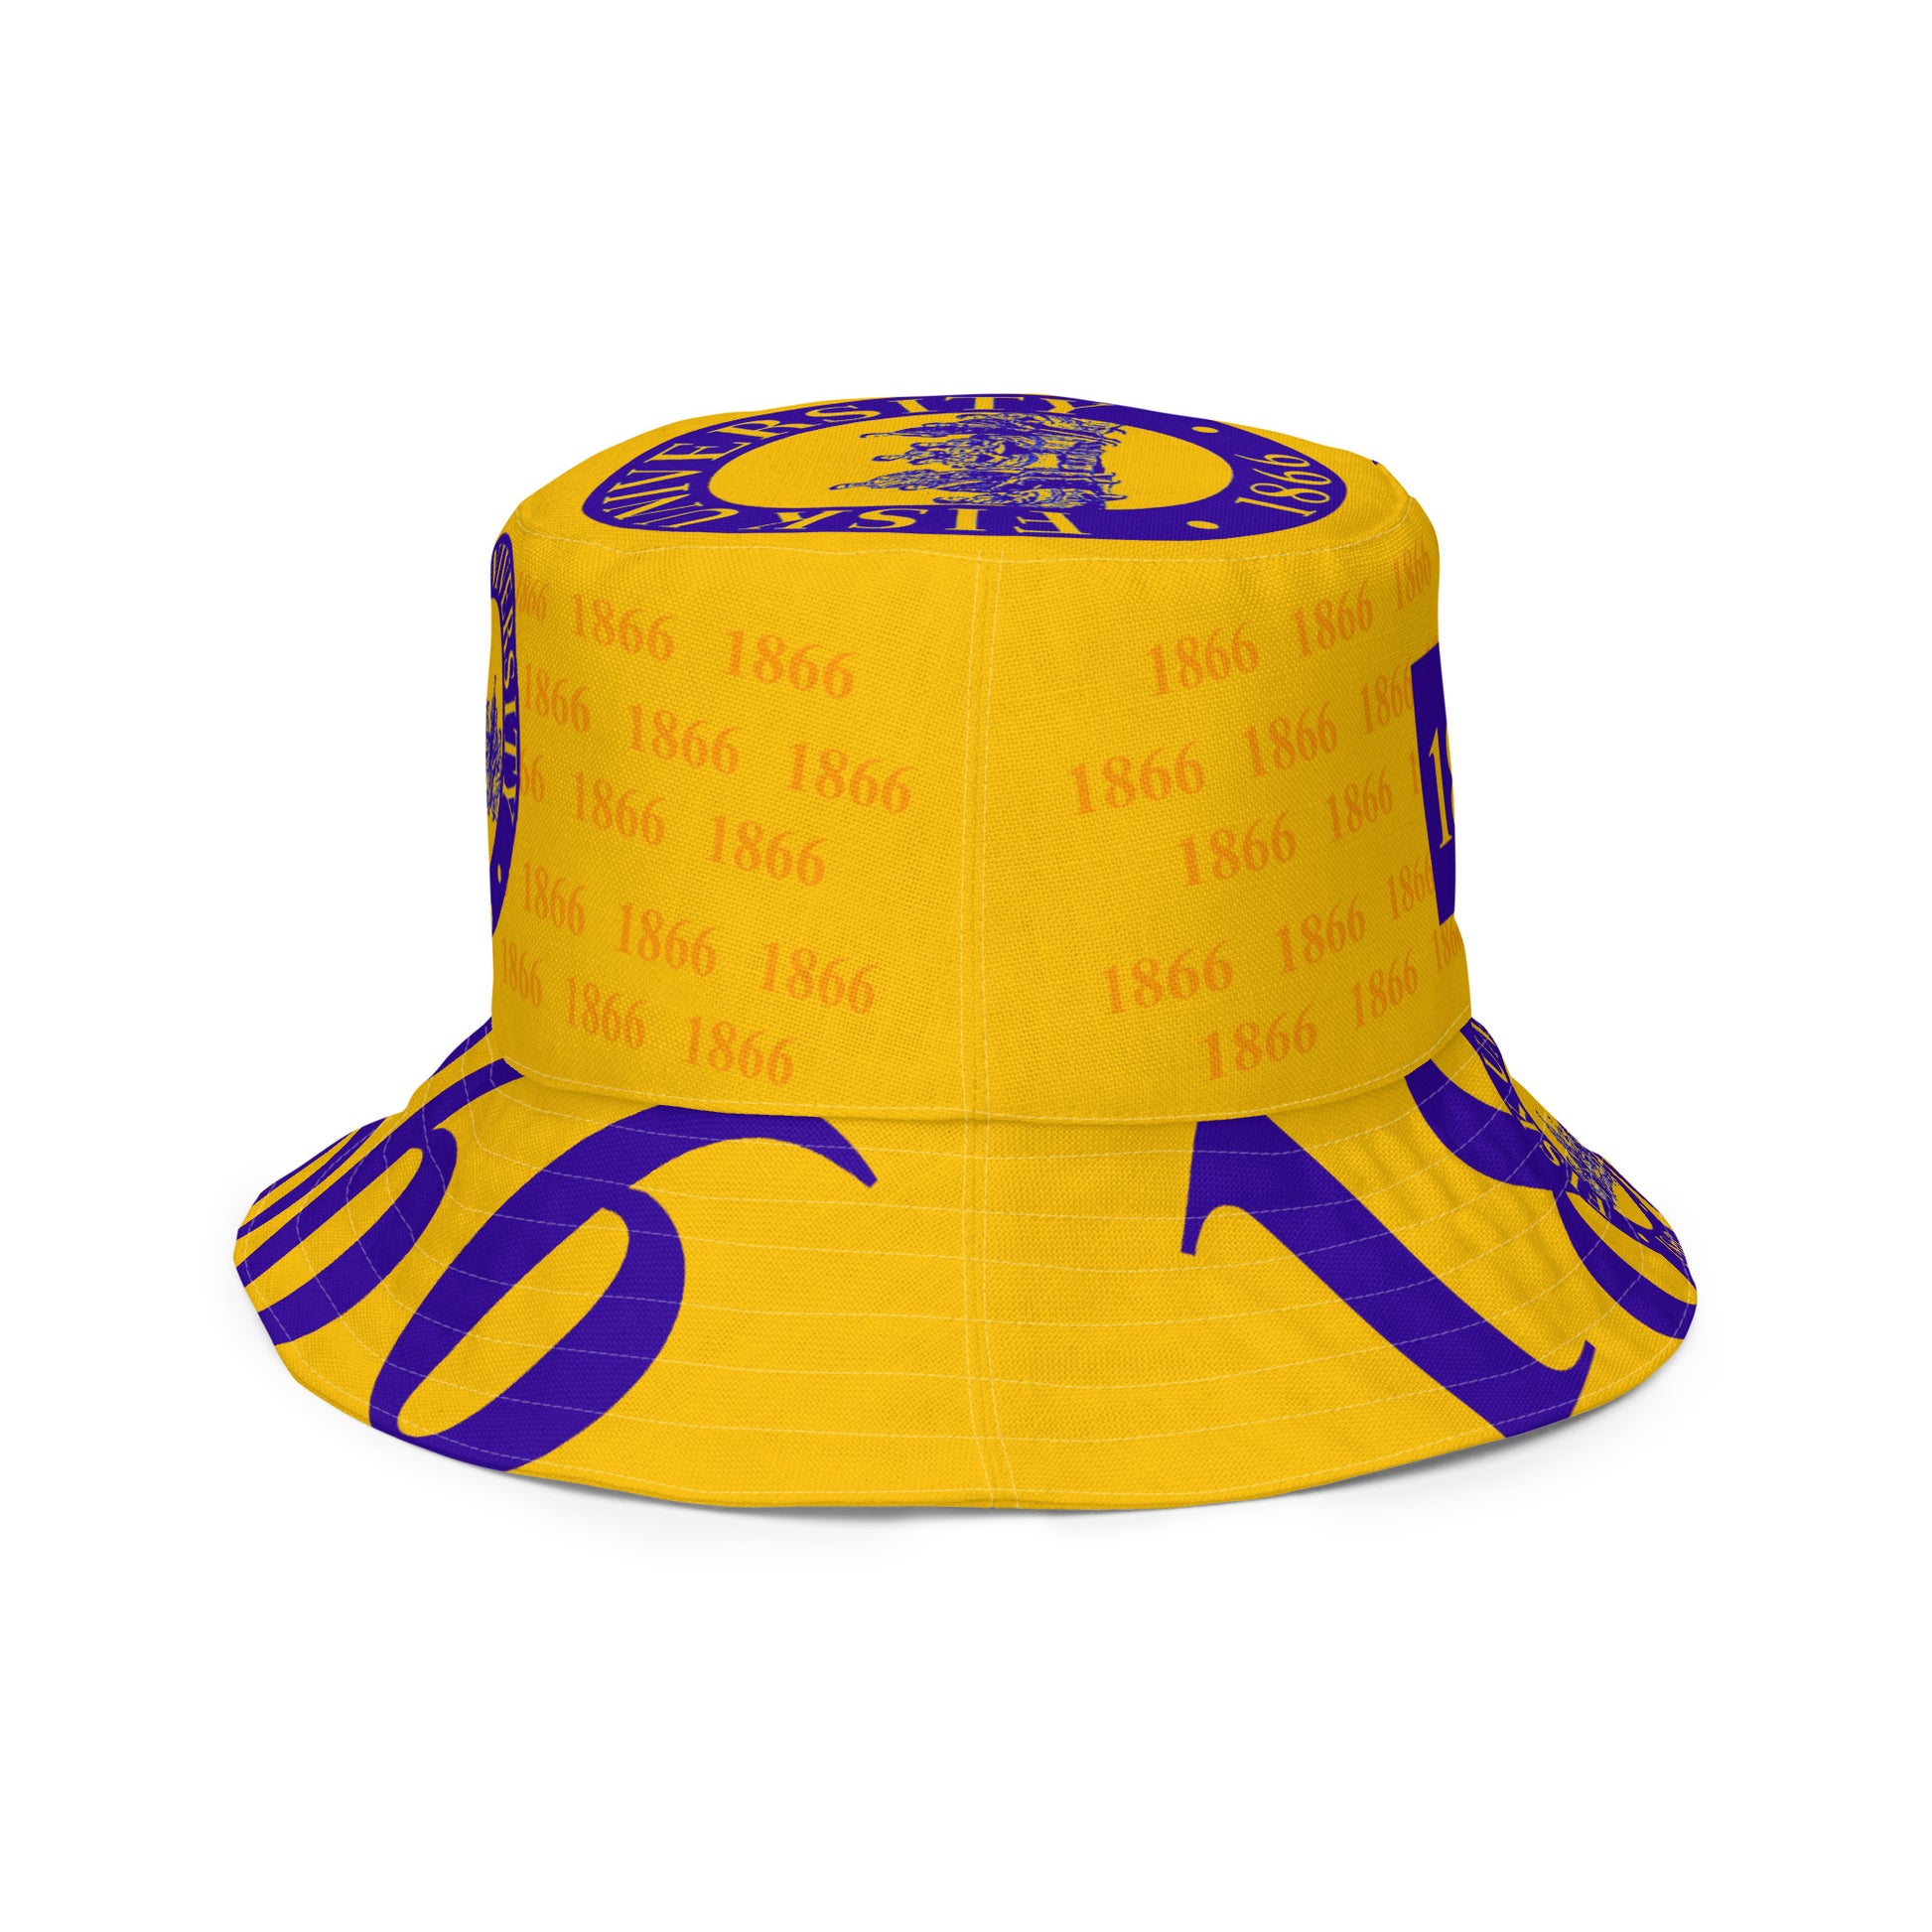 Bulldog – Bucket & Fisk TheFiskite Hat sides! Reversible 1866 -